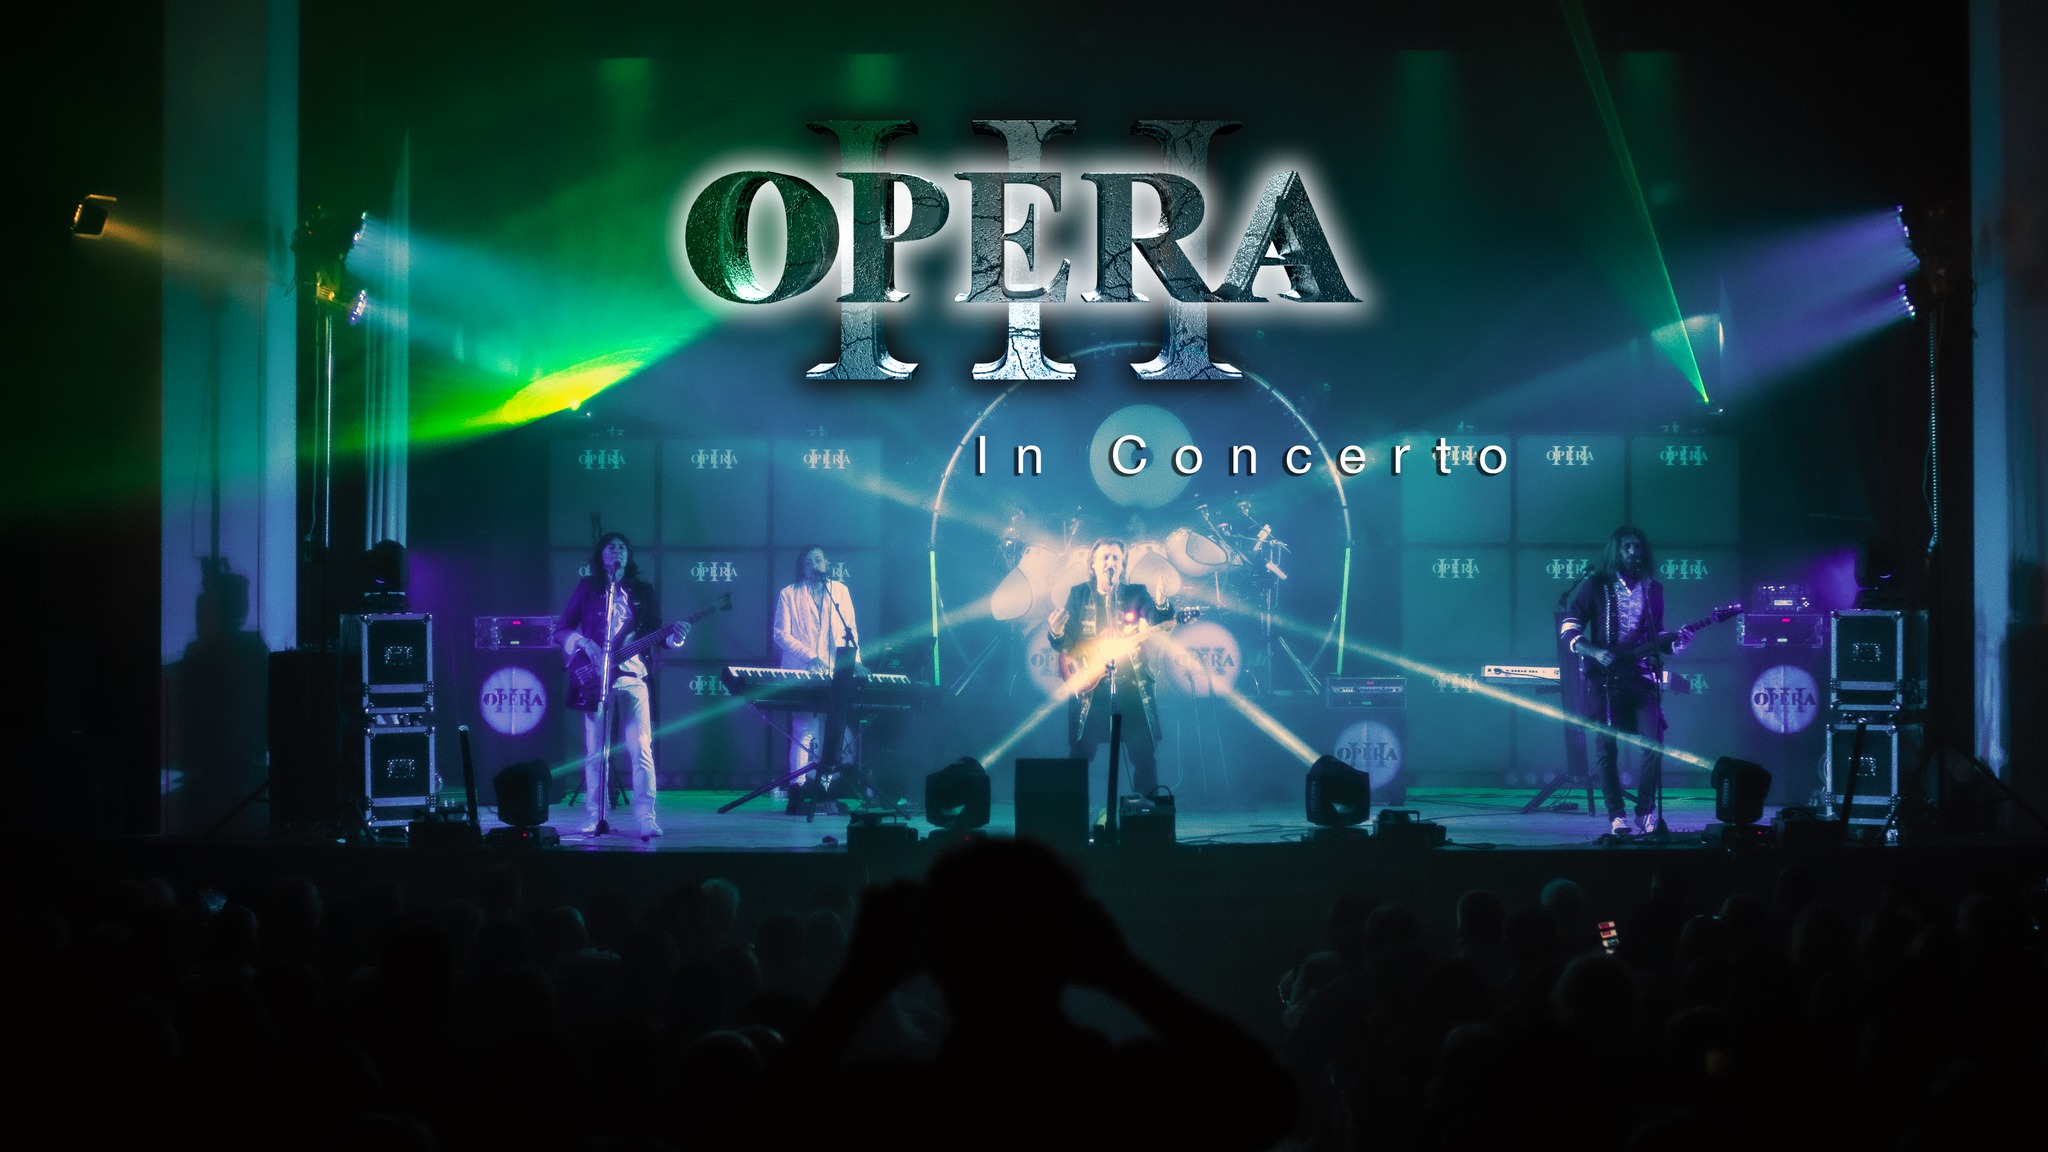 Opera III in Concerto @ Festa San Bartolomeo - Casalpusterlengo (LO)